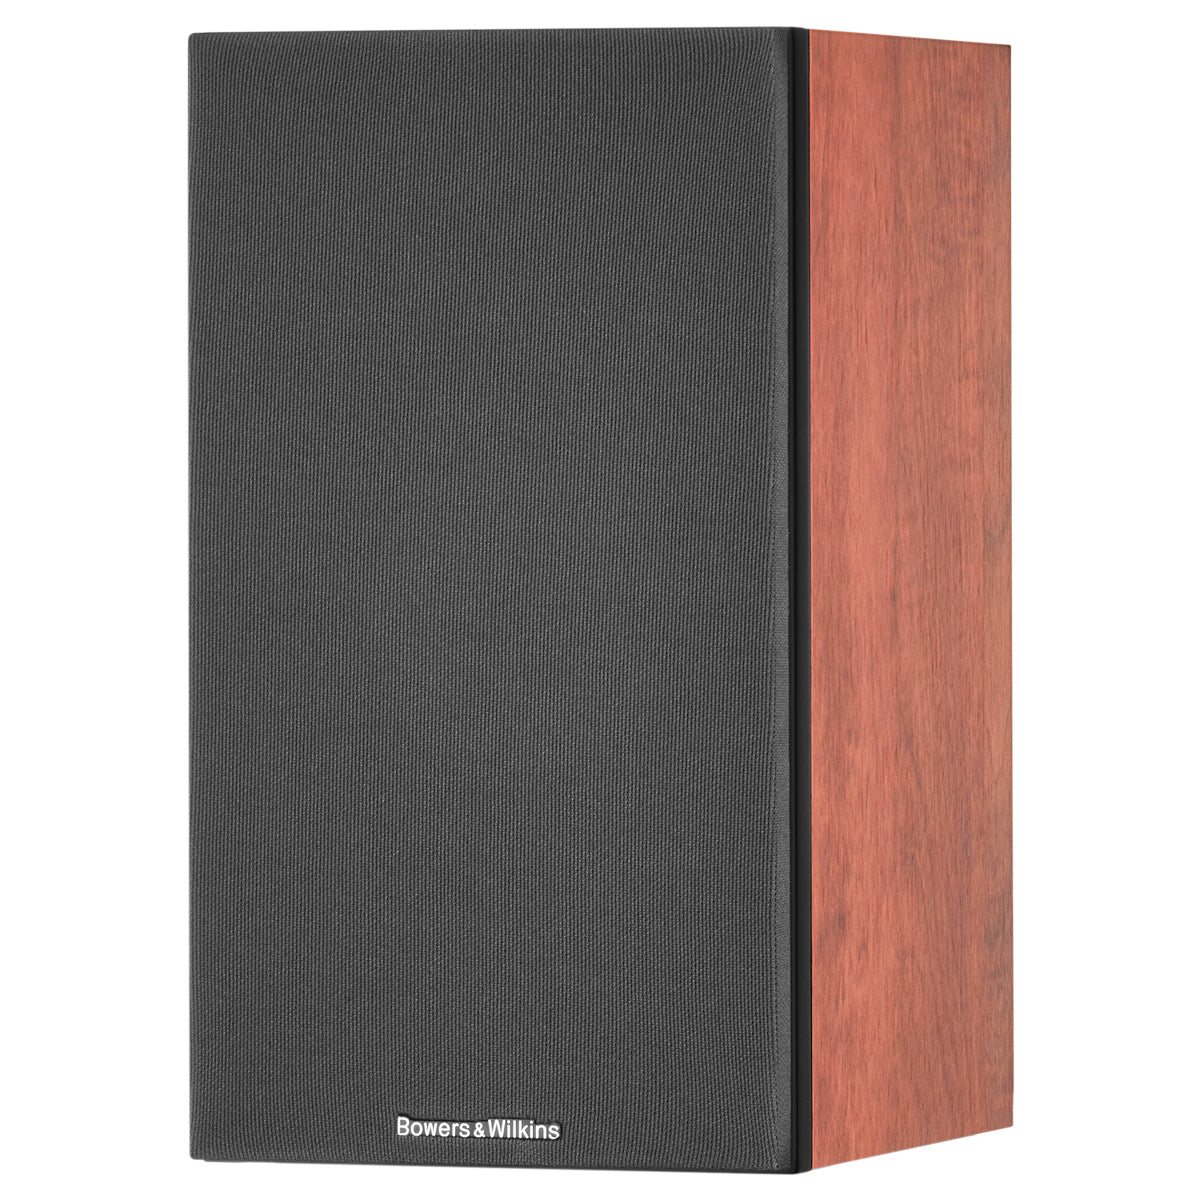 Bowers & Wilkins 607 S2 Anniversary Edition Bookshelf Speakers - Red Cherry - The Audio Experts